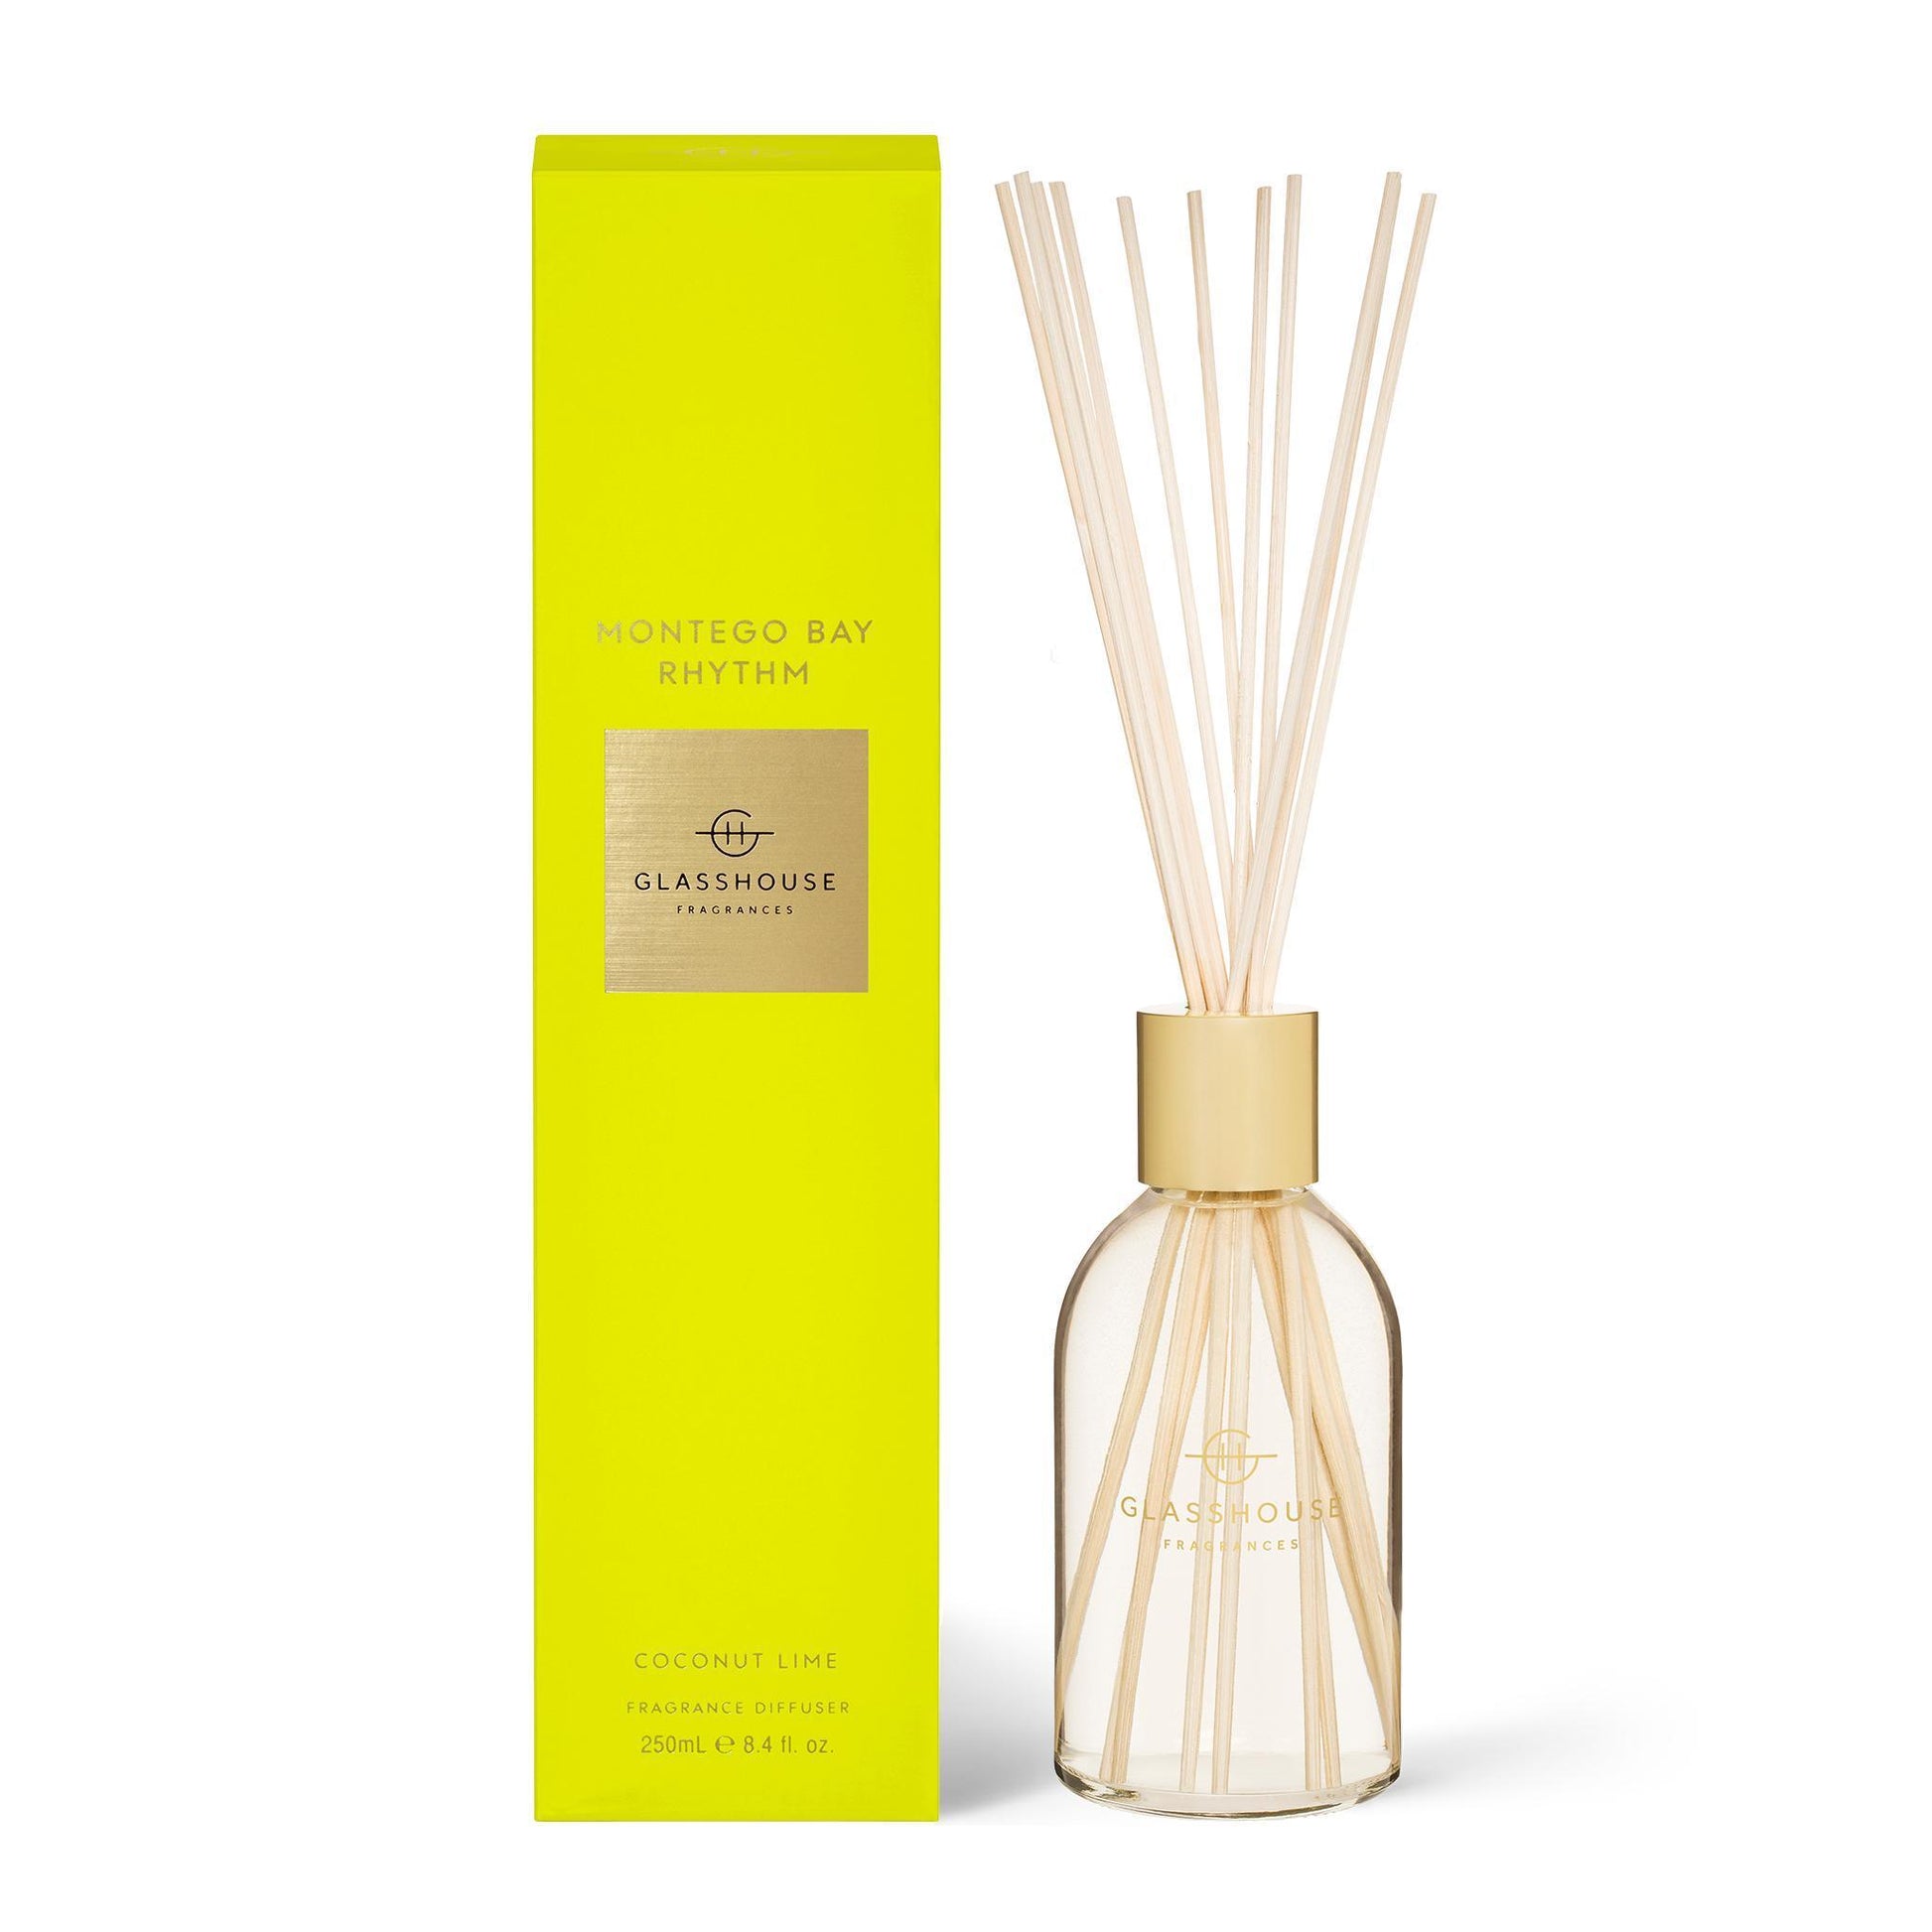 Diffuser 250ml - Montego Bay Rhythm - Glasshouse Fragrances - FUDGE Gifts Home Lifestyle